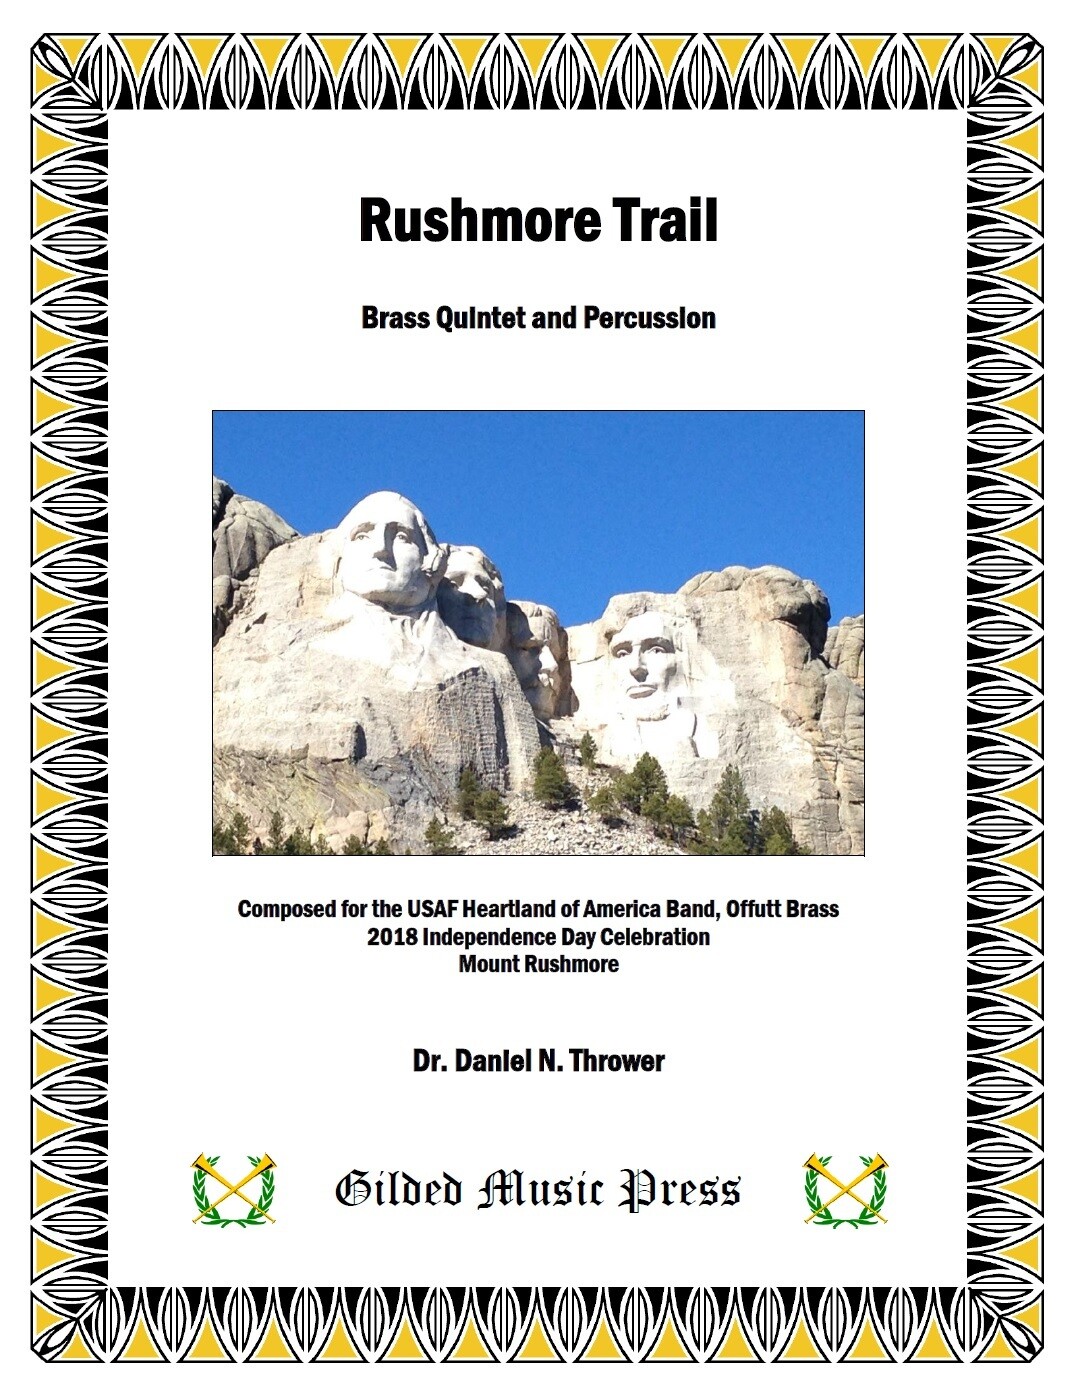 GMP 3008: Rushmore Trail (Brass Quintet & Percussion), Dr. Daniel Thrower